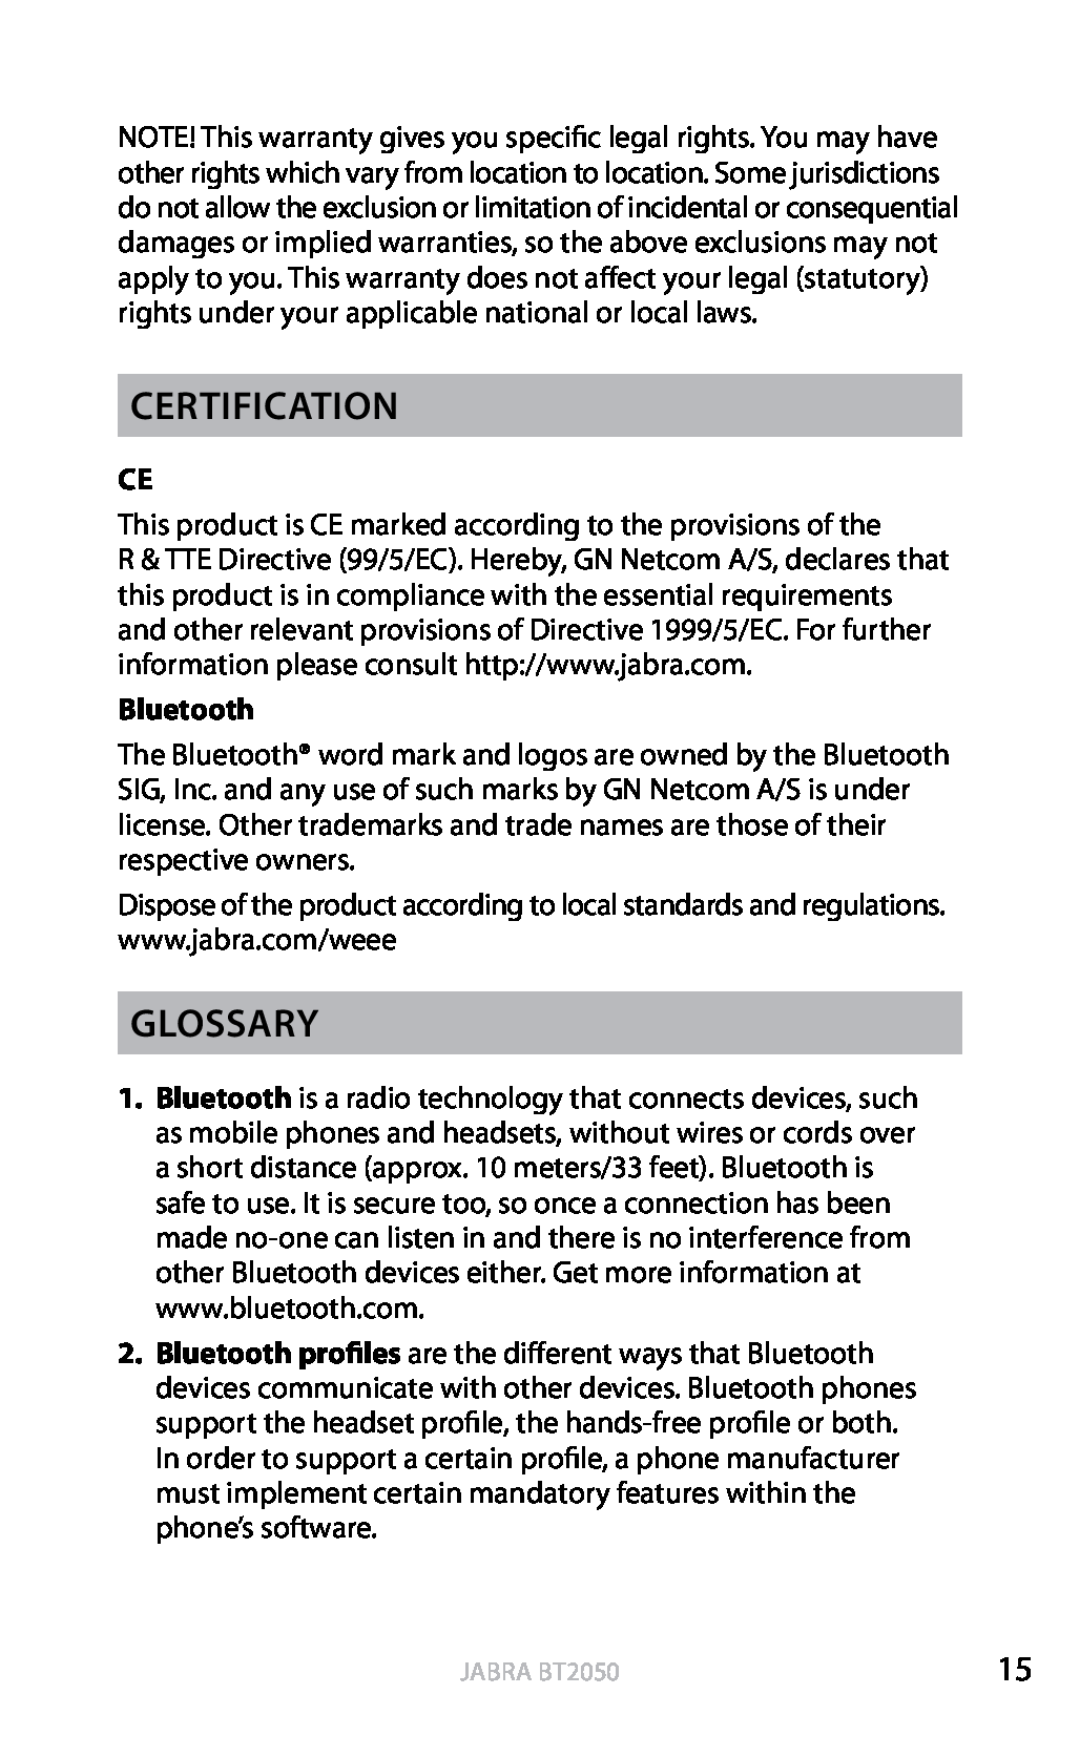 Jabra BT2050 user manual Certification, Glossary, Bluetooth, english 